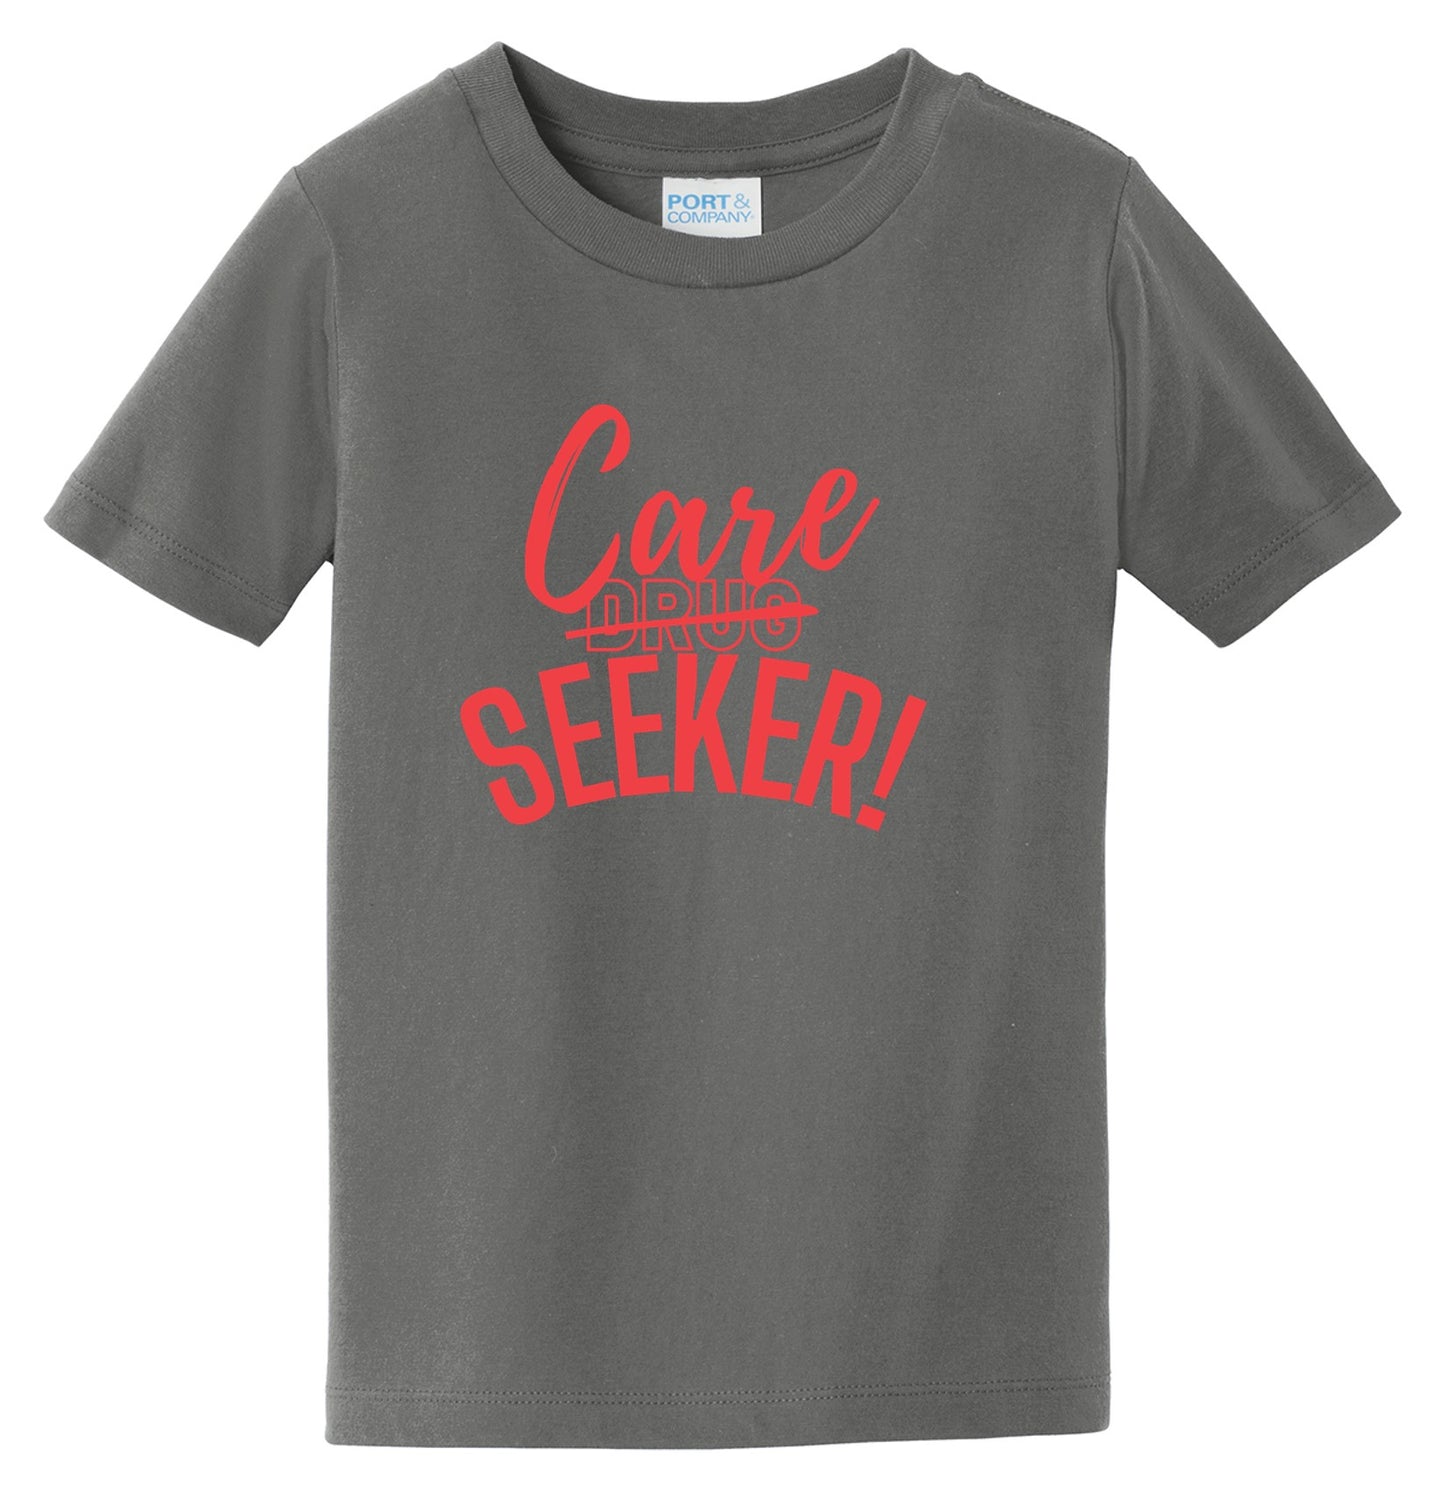 CARE Seeker NOT Drug Seeker (Toddler)